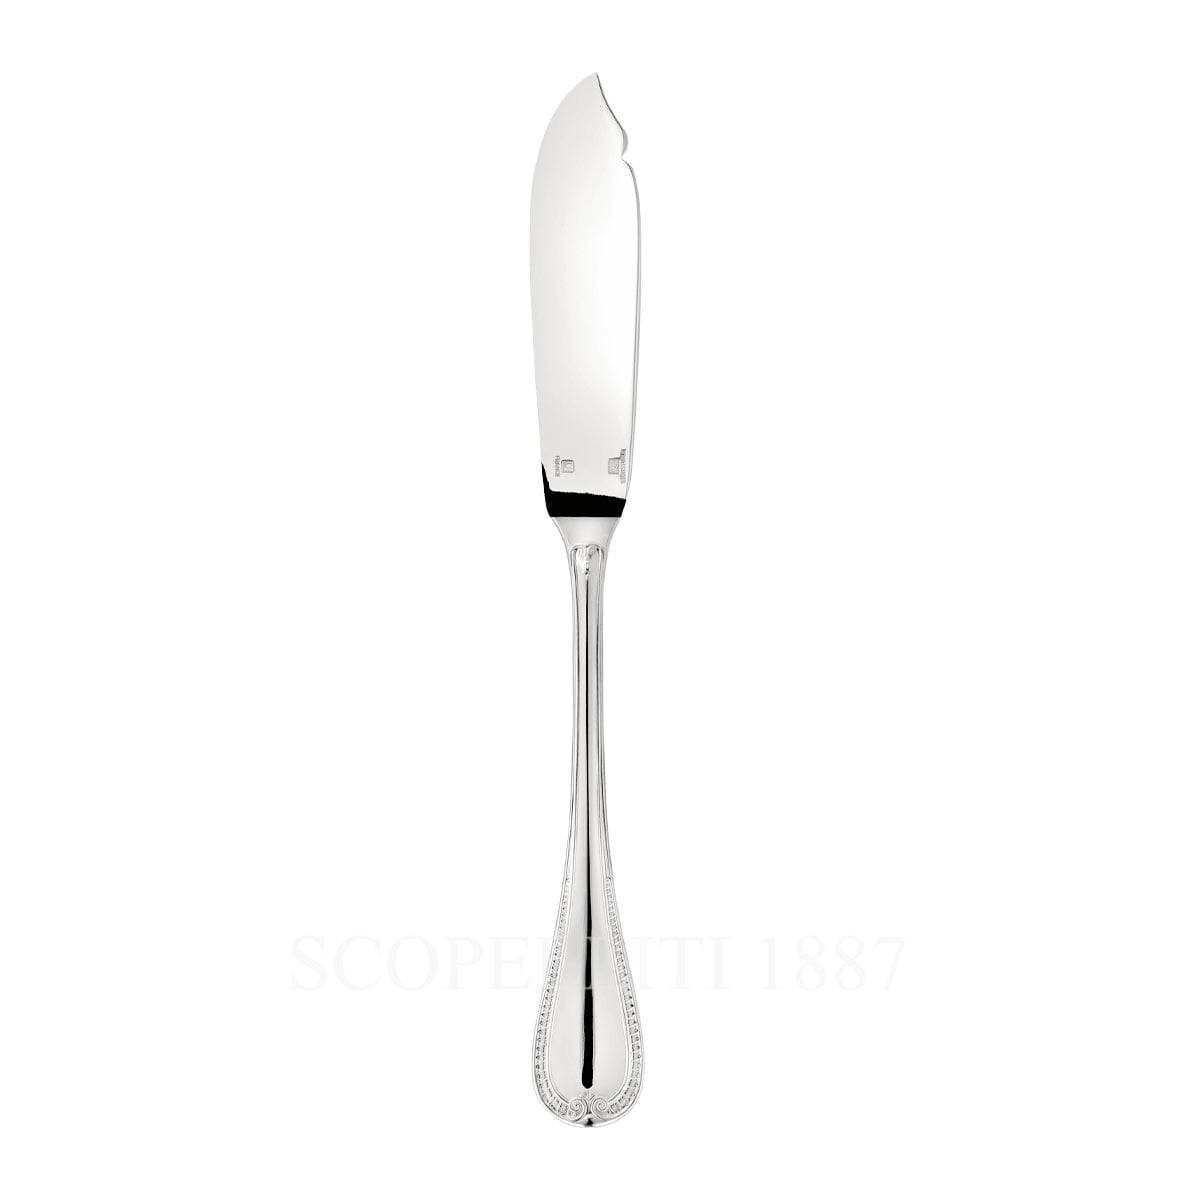 Christofle Malmaison Silver Plated Fish Knife - Luxury Christofle flatware